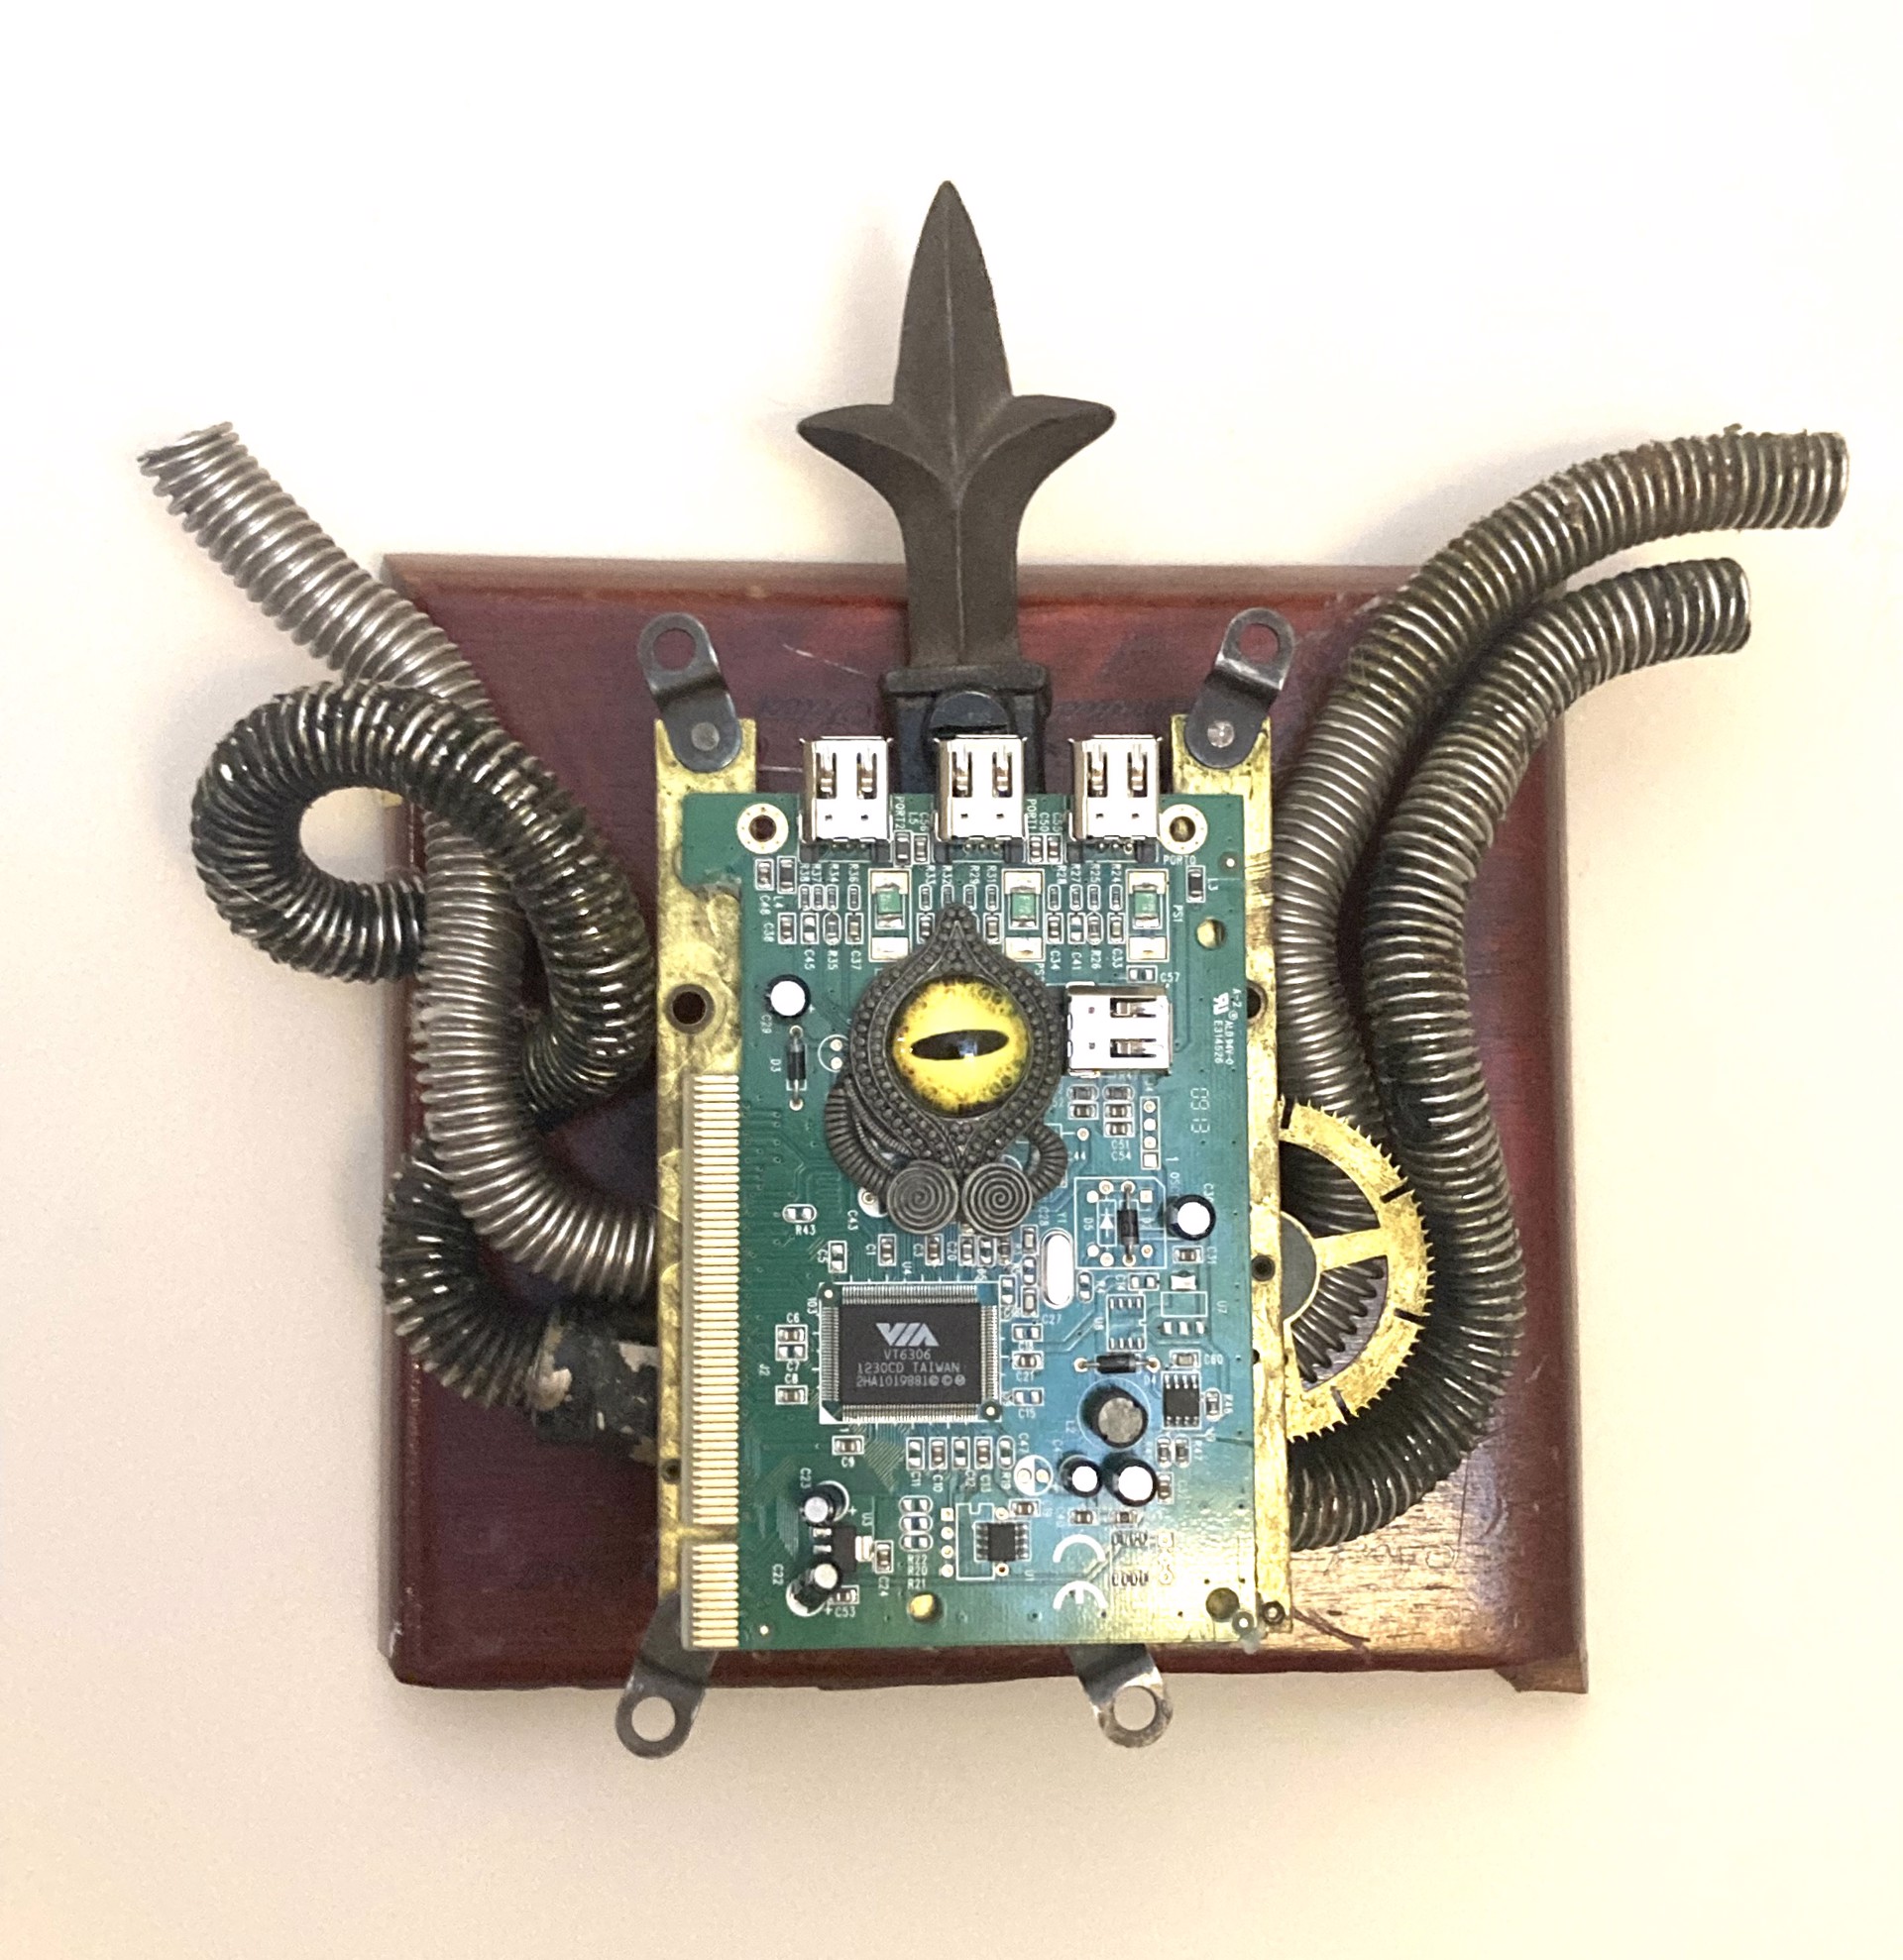 Maven Kahn (Visability Art Lab), Symbiotic Cybernetic Cephalopod by Visiting Artist